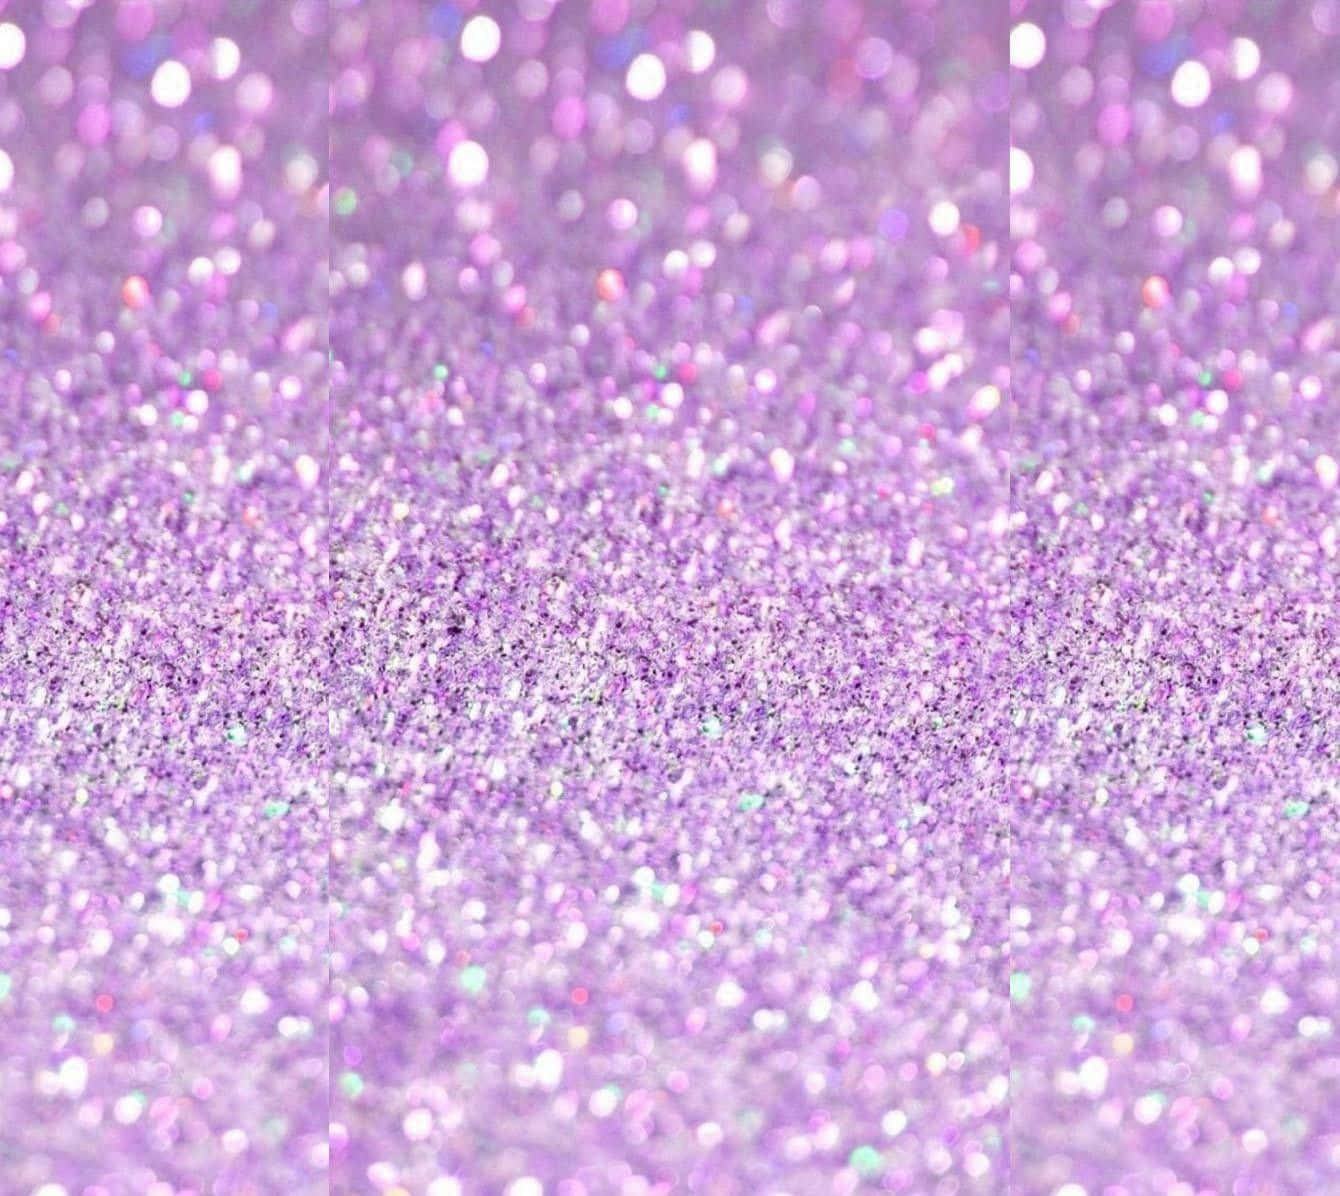 100+] Purple Glitter Backgrounds